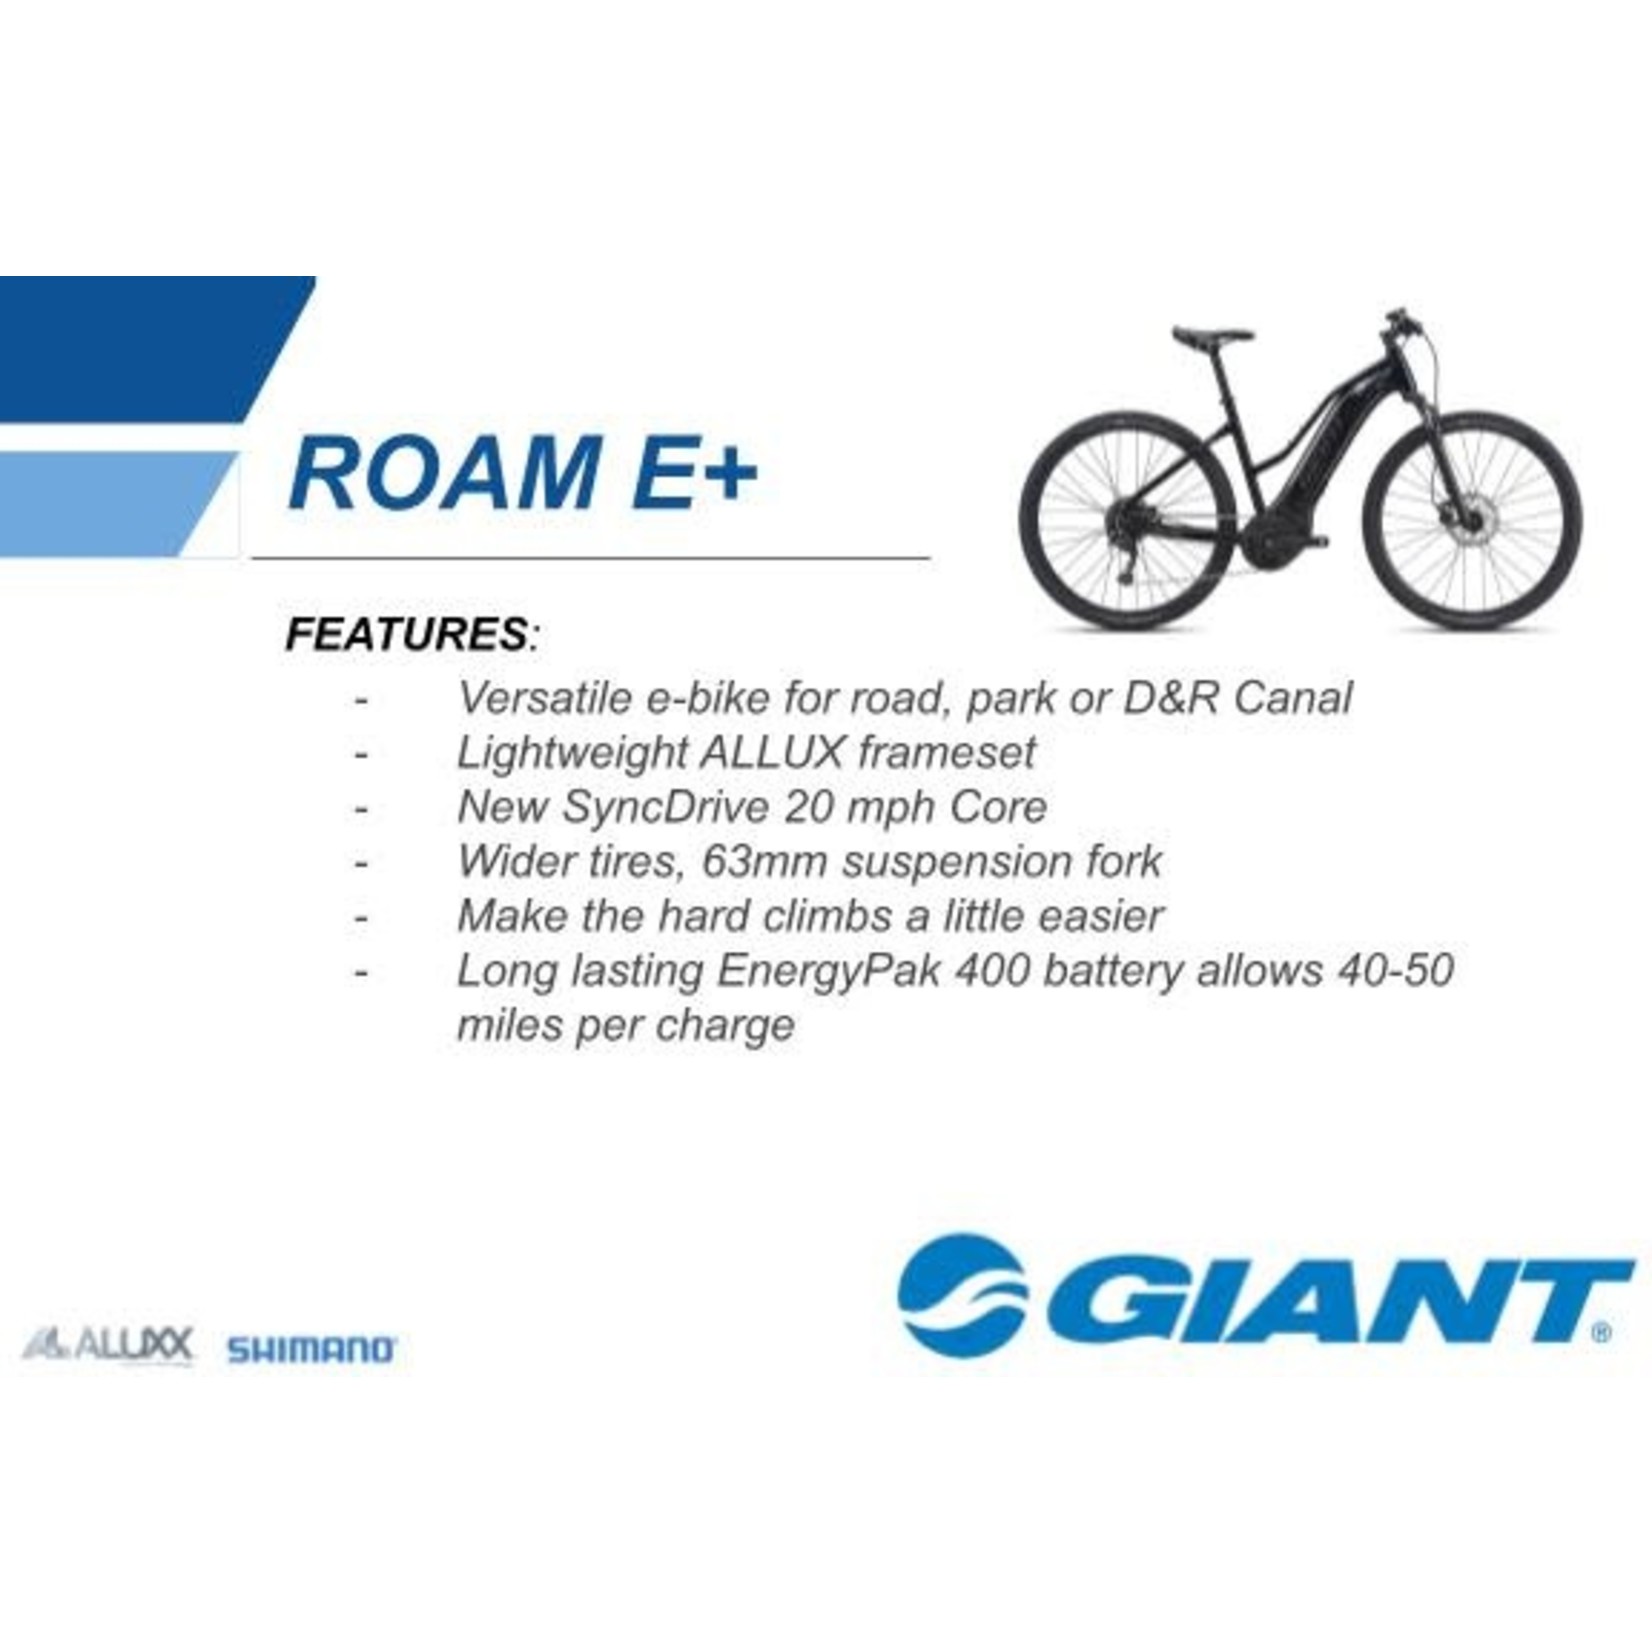 Giant Giant Roam E+ 20MPH GTS